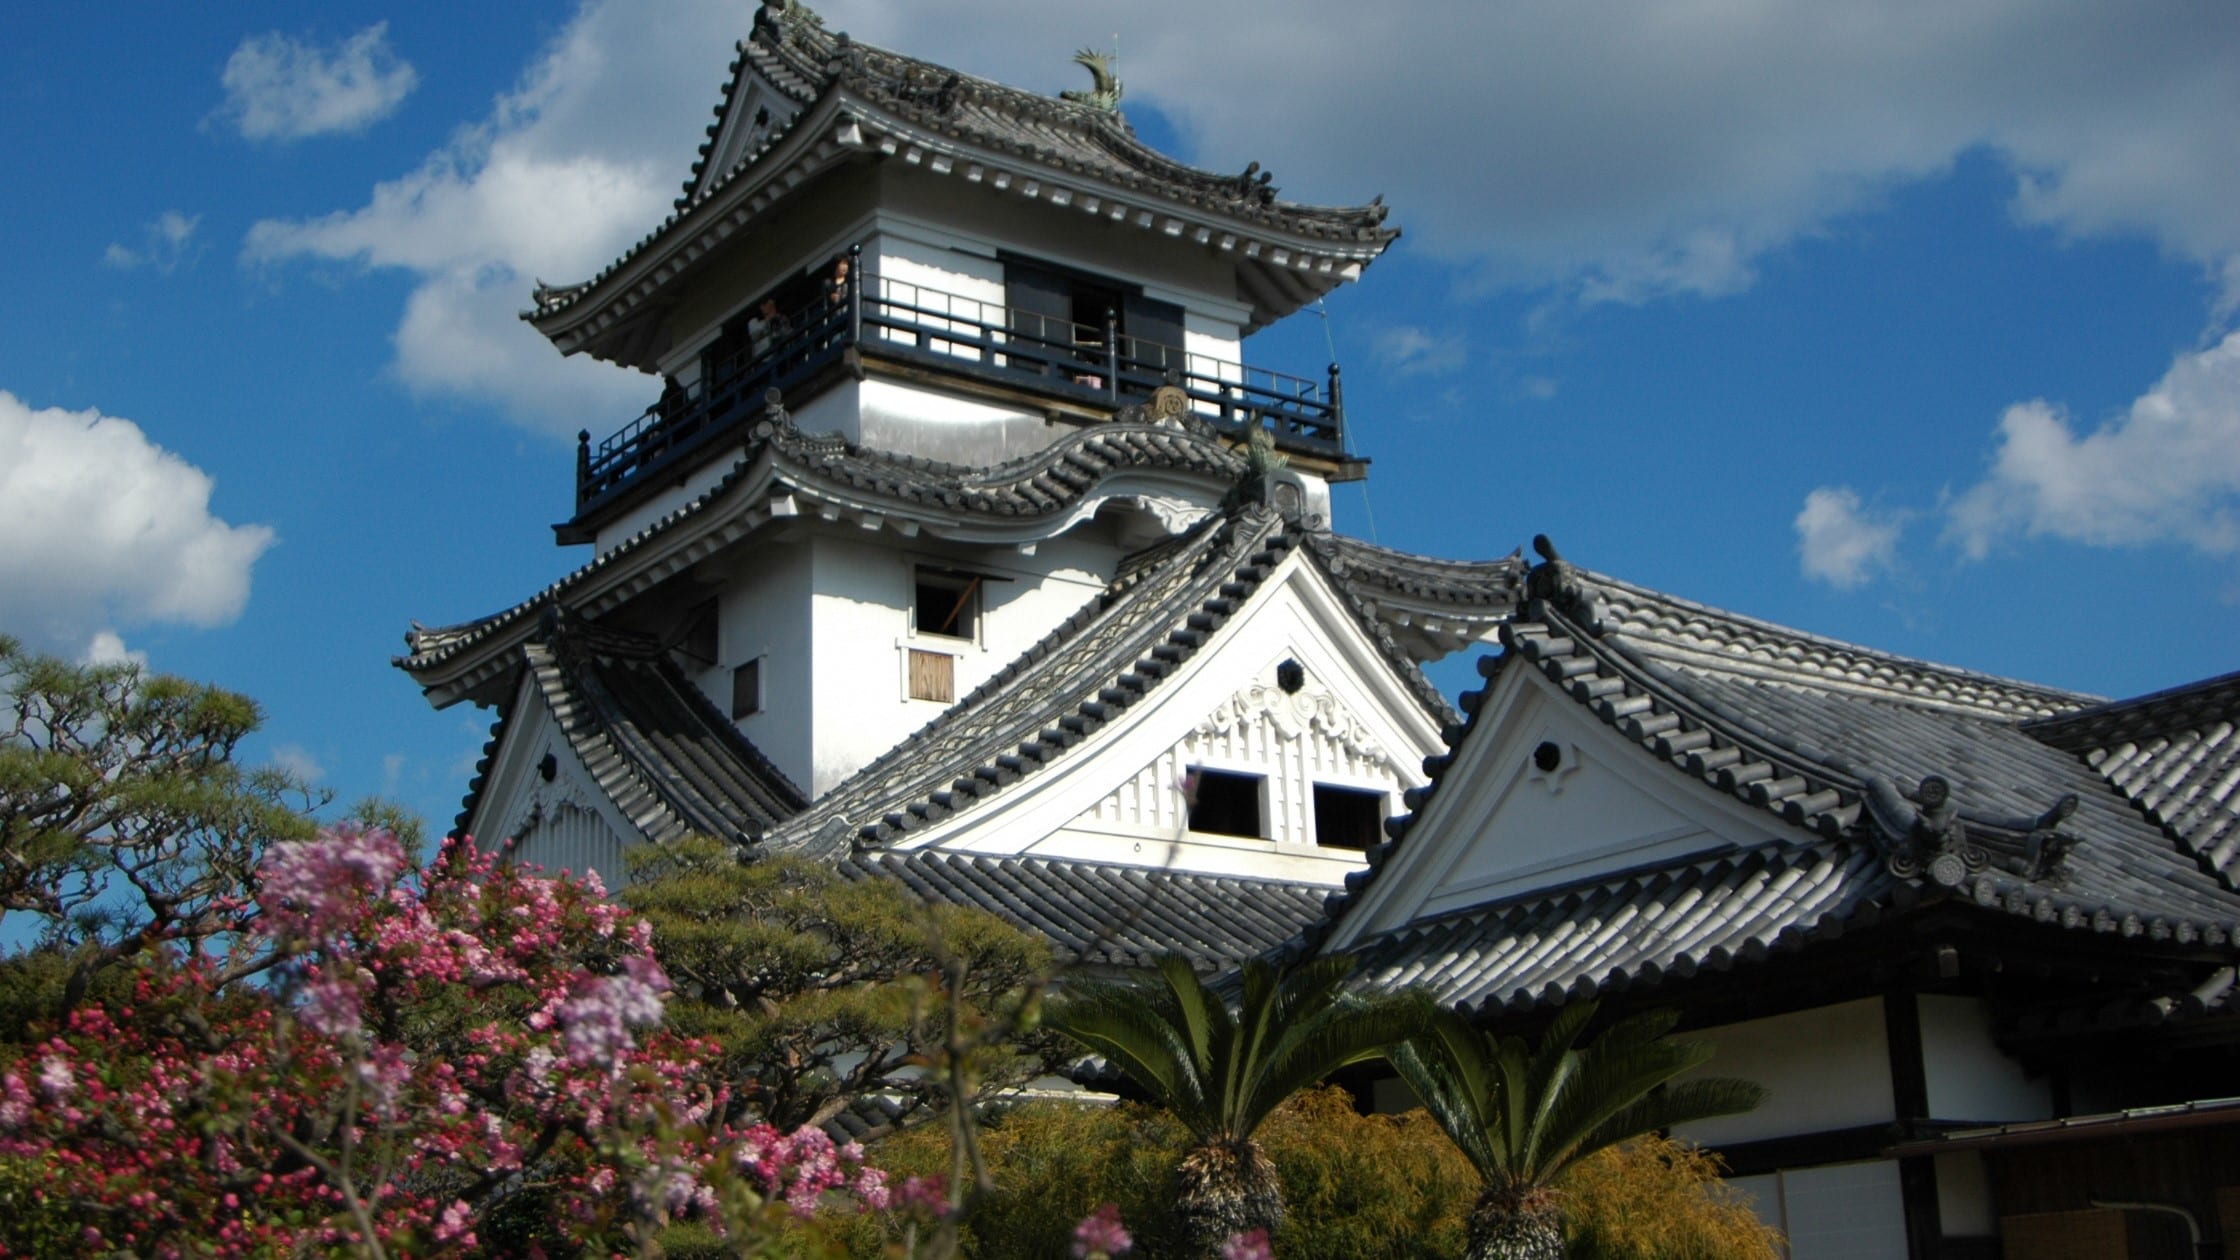 Provided by: Kochi City Kochi Castle: One of Japan's 100 Great Castles